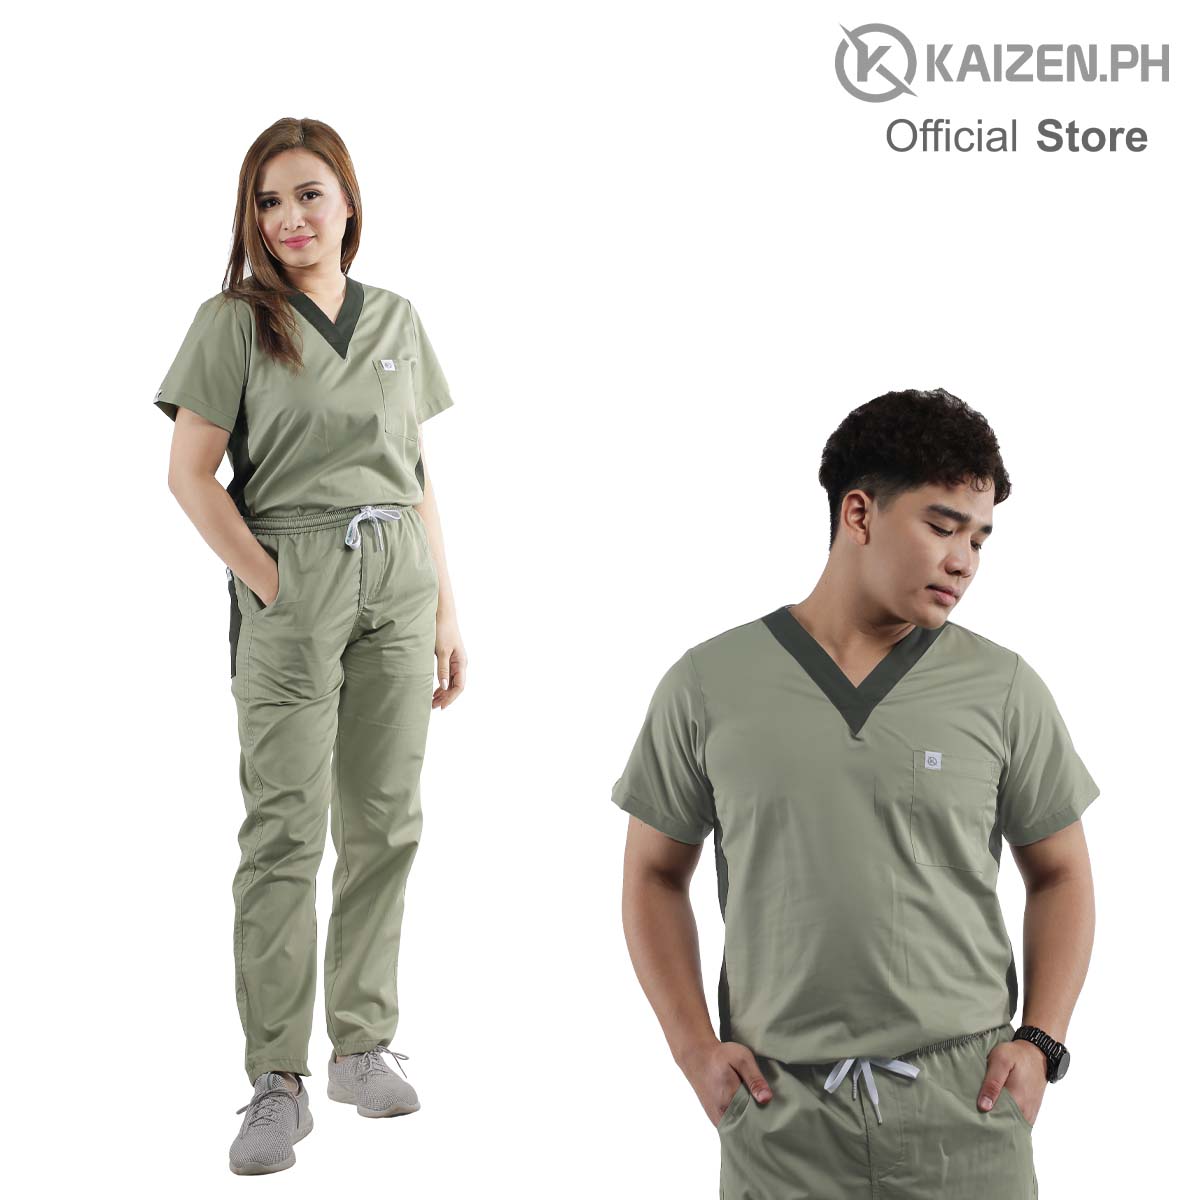 KAIZEN.PH Scrub Suit 1st Gen KSS-28, 2-Tone Amboy Cut Top Regular Pants Series